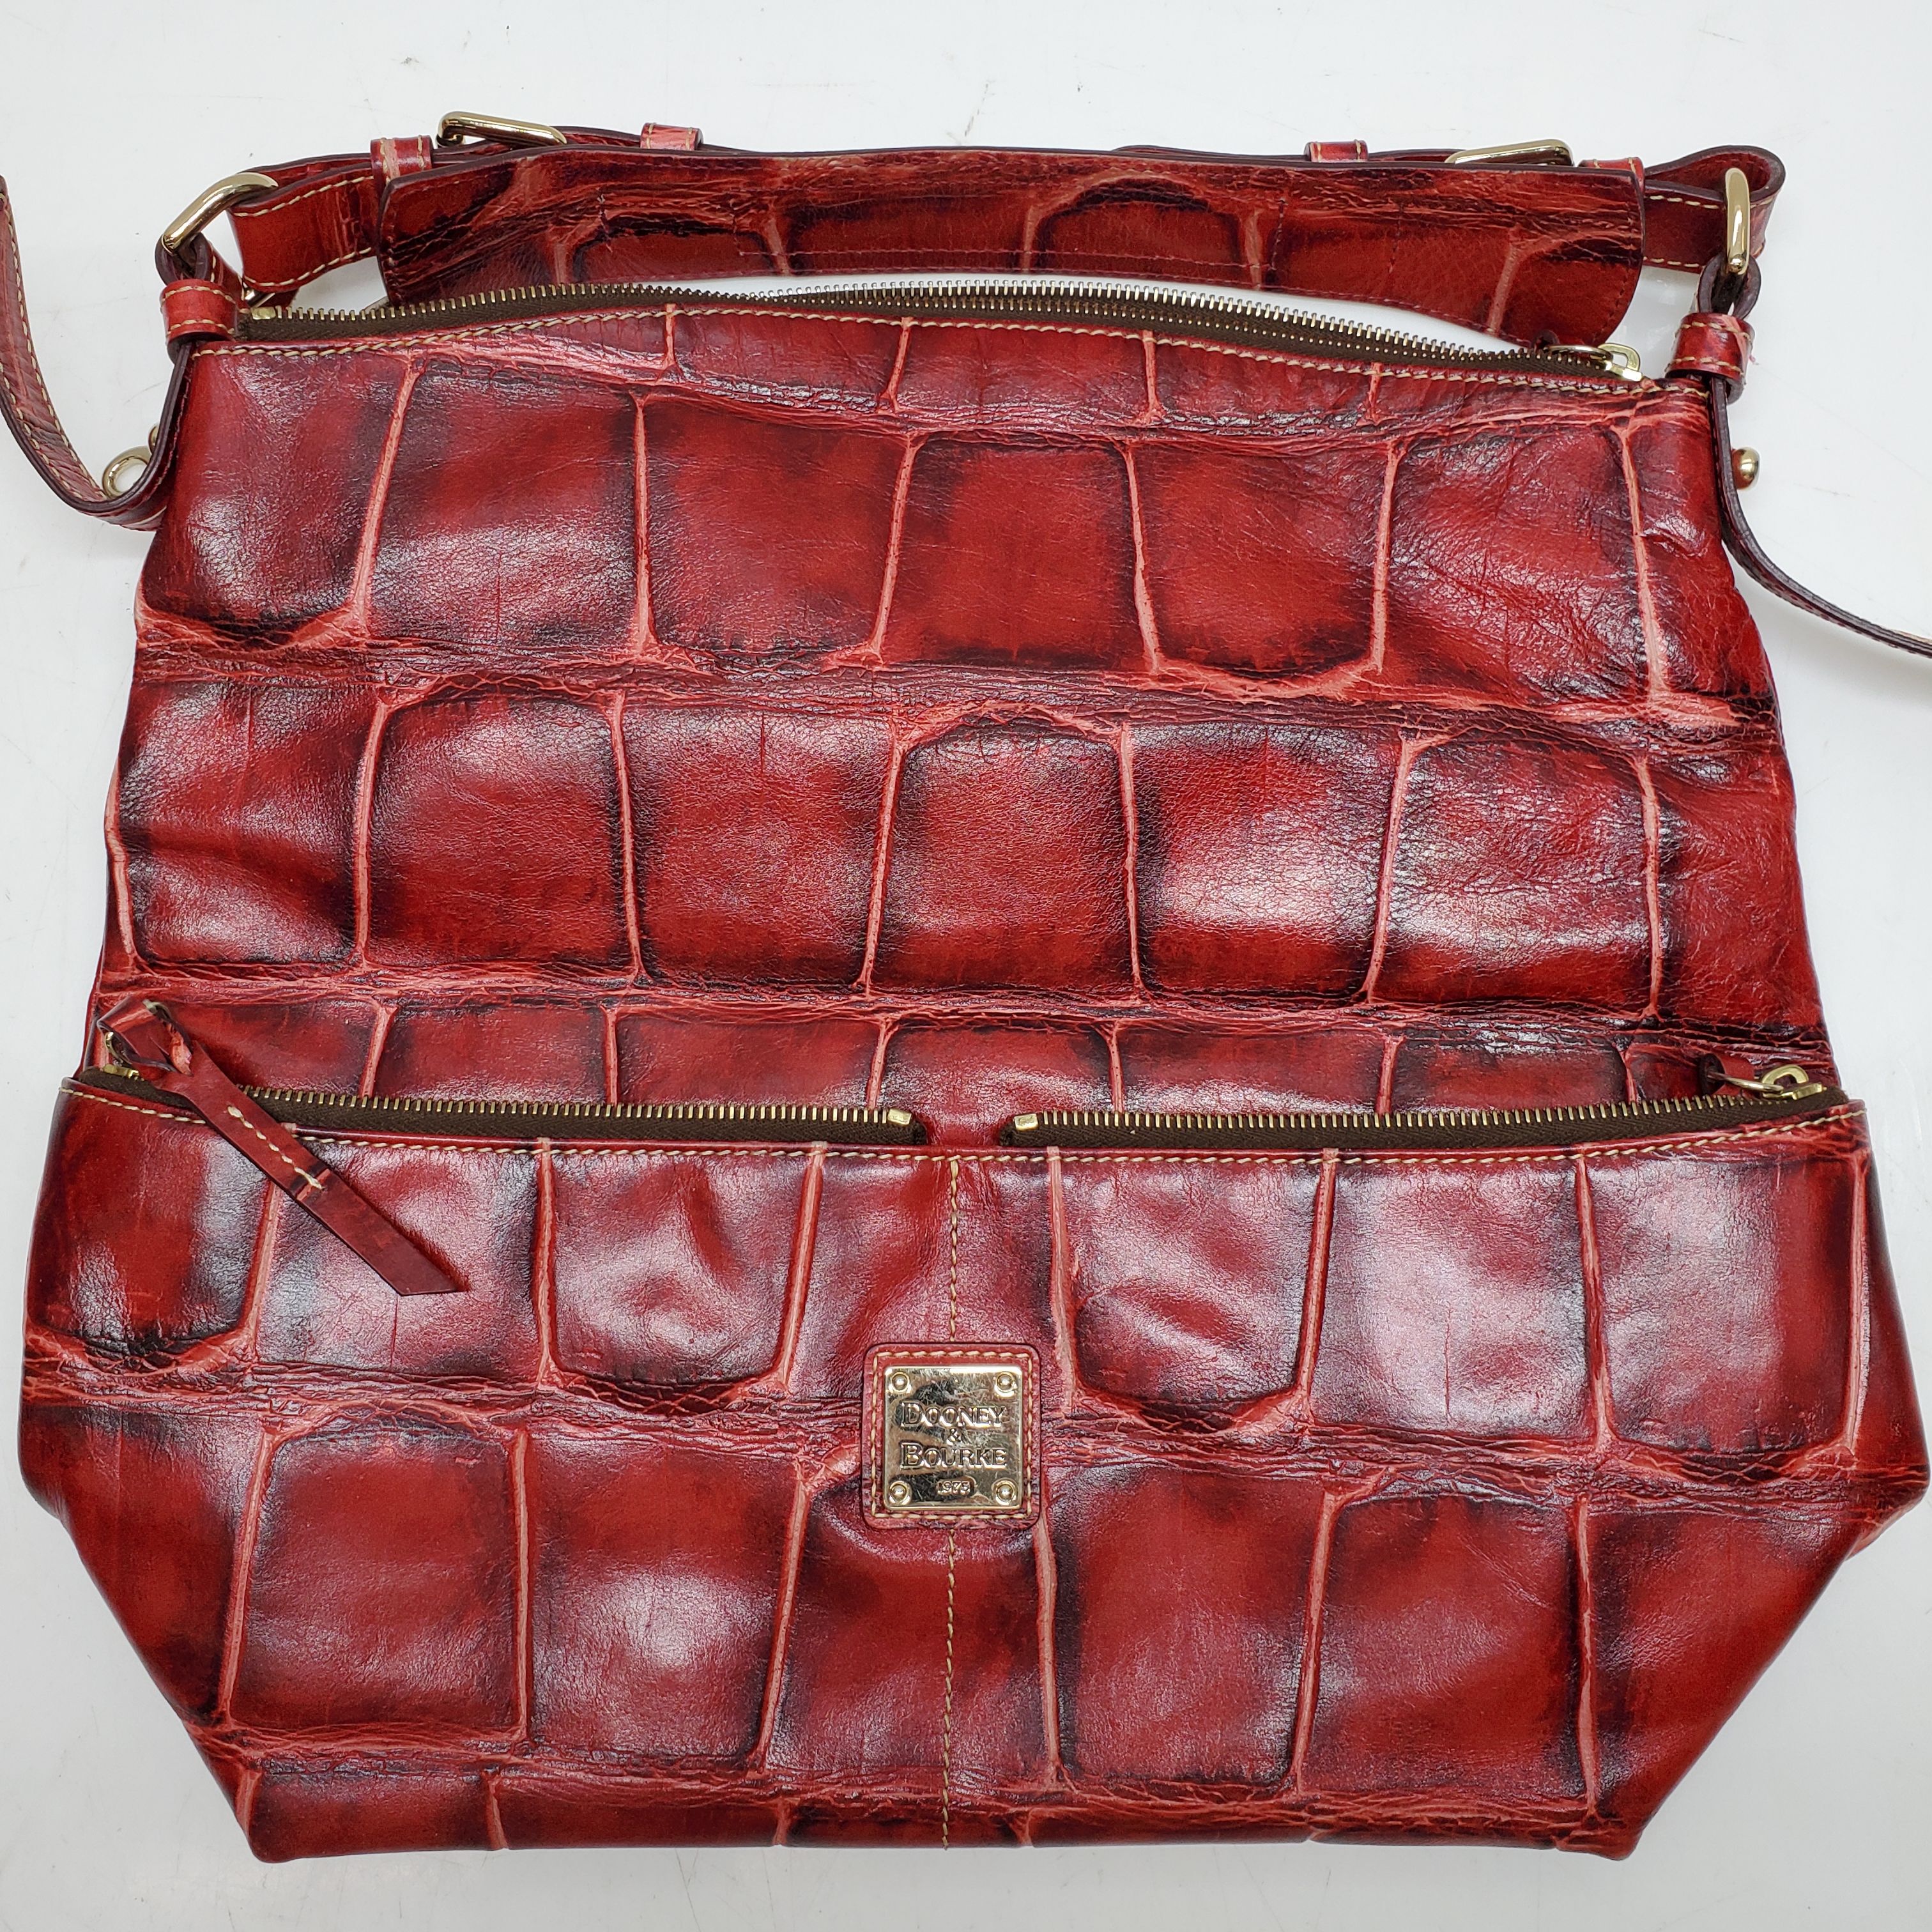 Sold at Auction: Loewe Handbag 